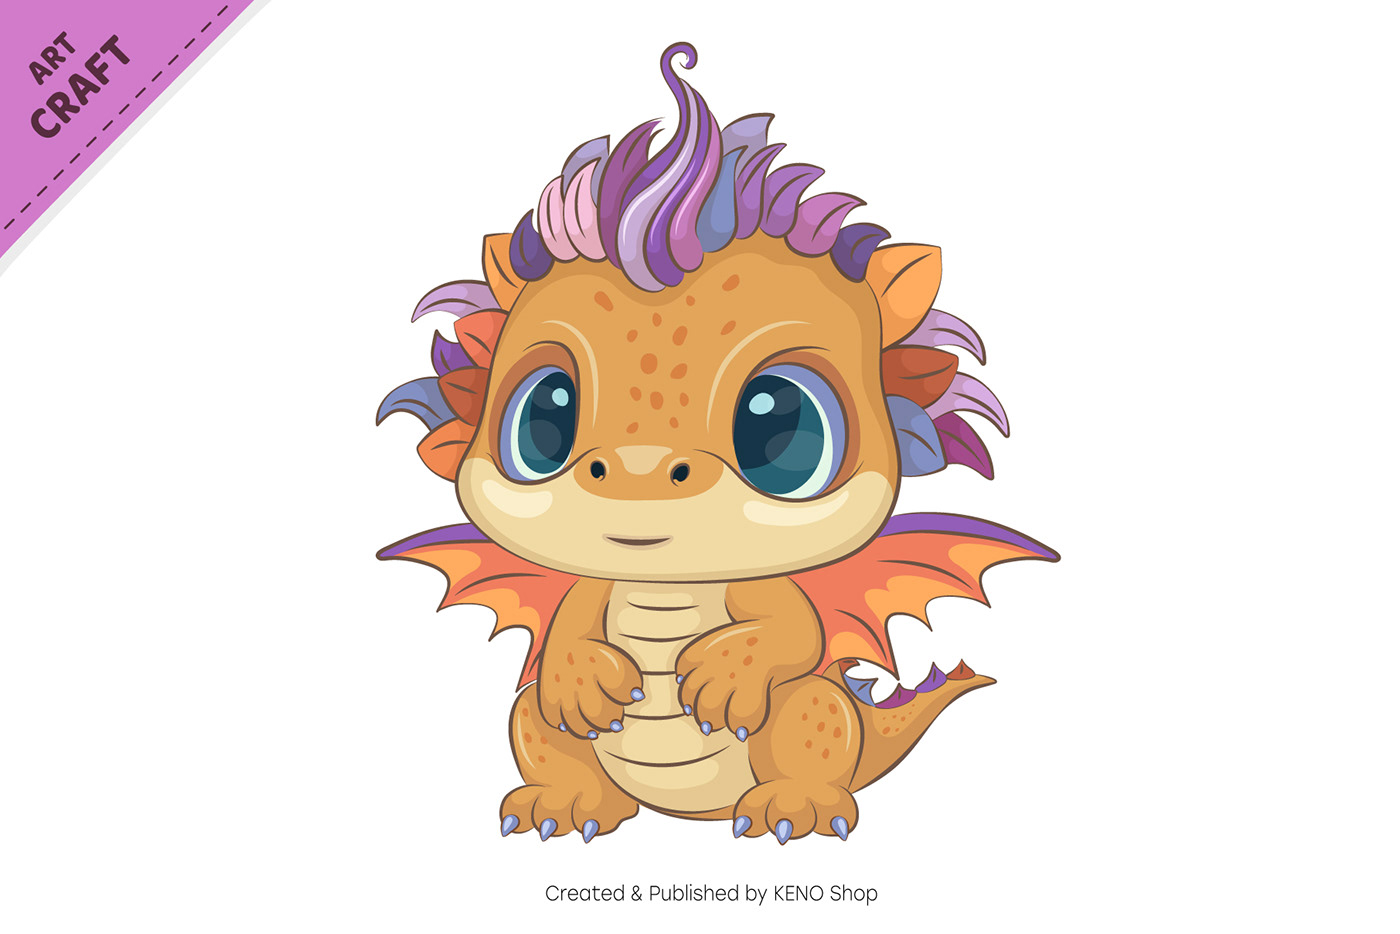 Cute cartoon illustration of sitting Flower baby dragon.